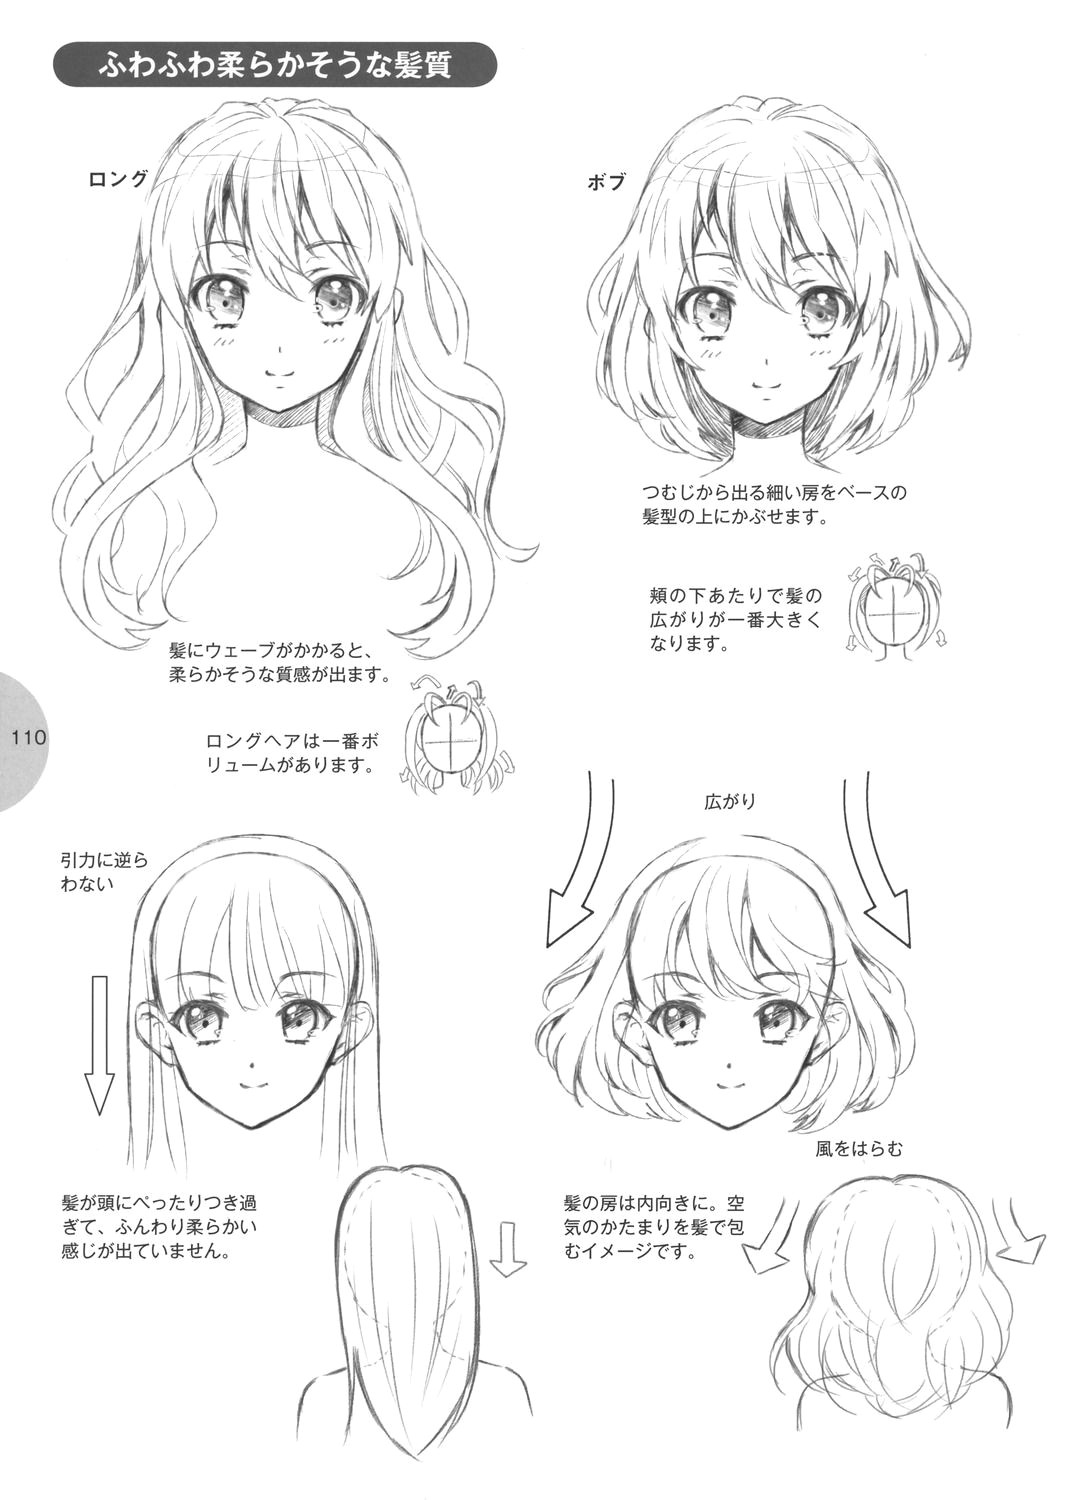 Anime Drawing Learning Tutorial Hair Artsy Inpirations Pinterest Drawings Manga